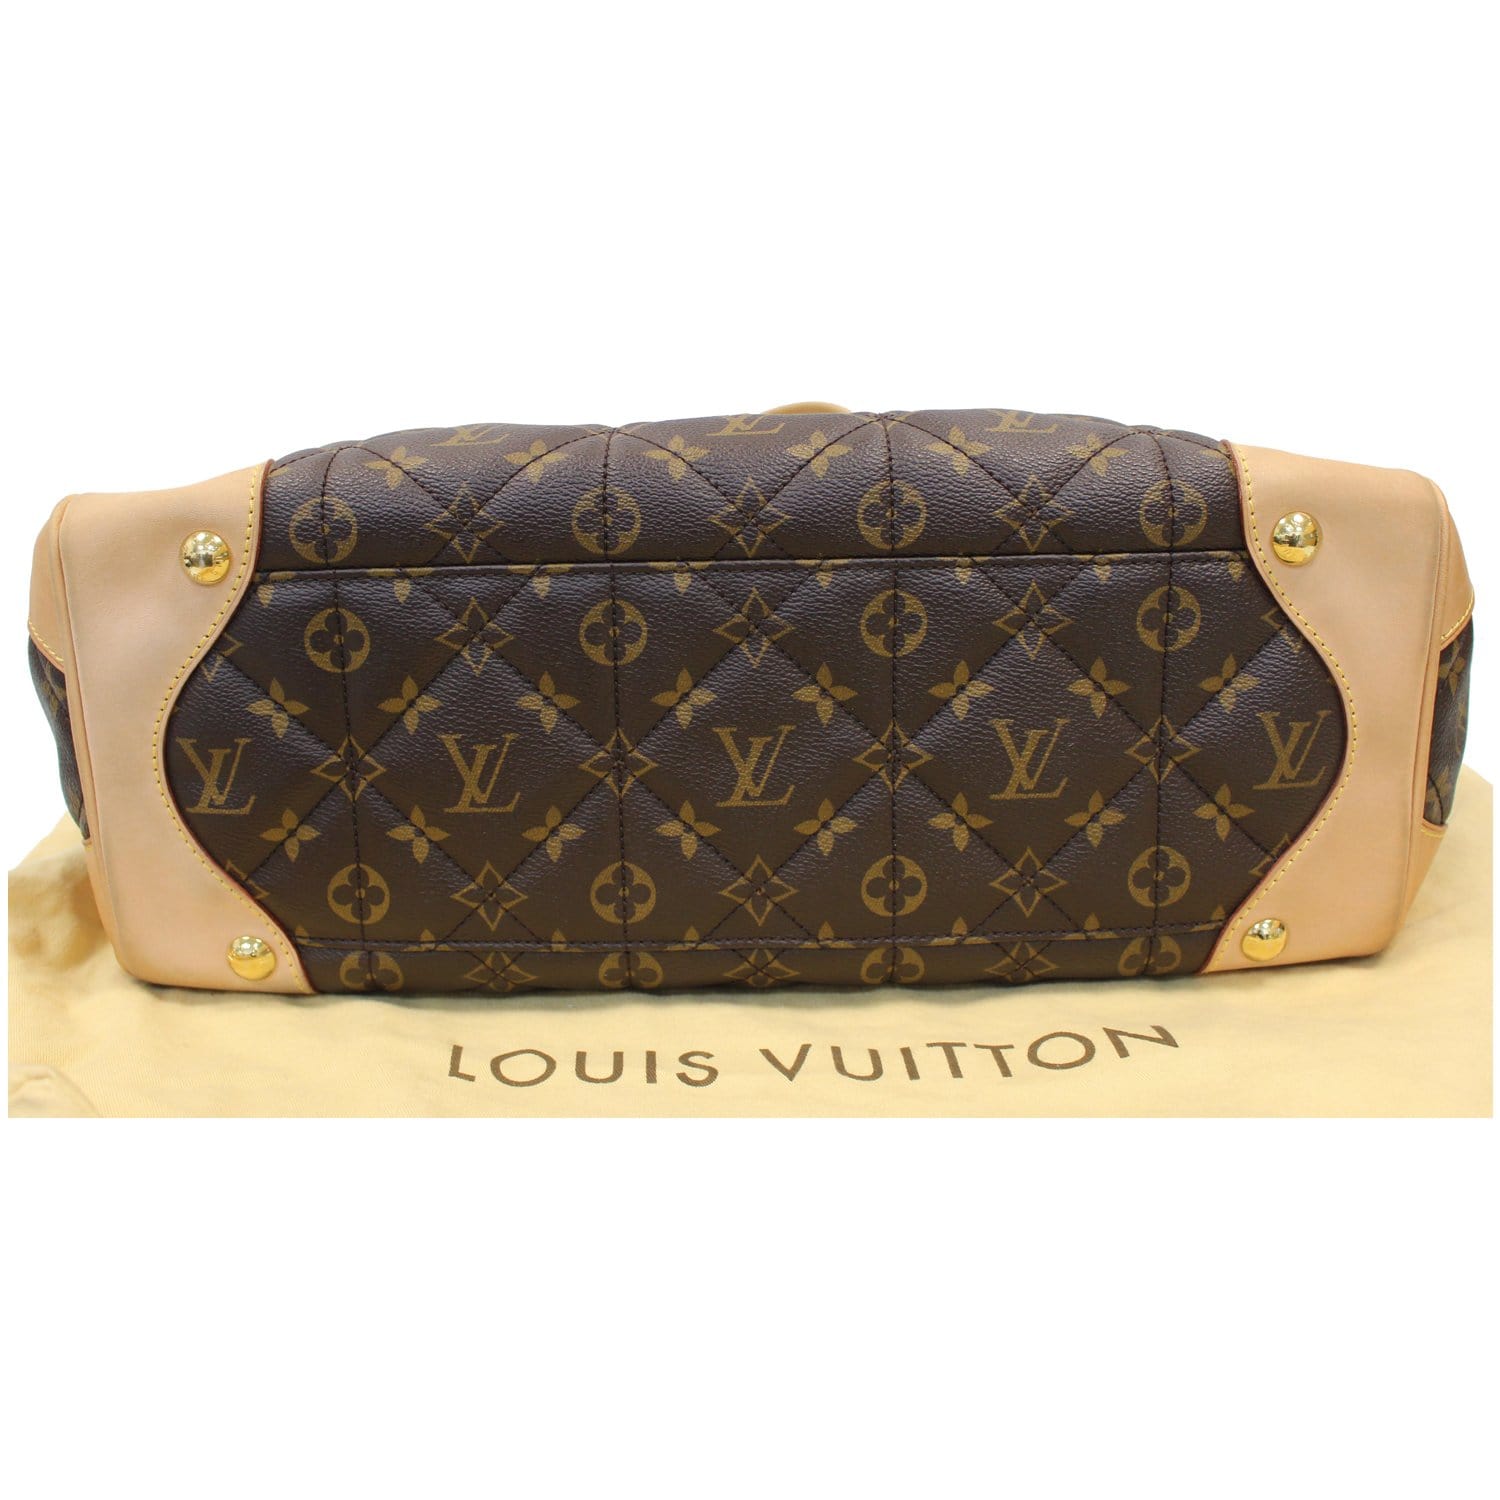 Personal Shopper 🇬🇧 on Instagram: “🗣New Louis Vuitton